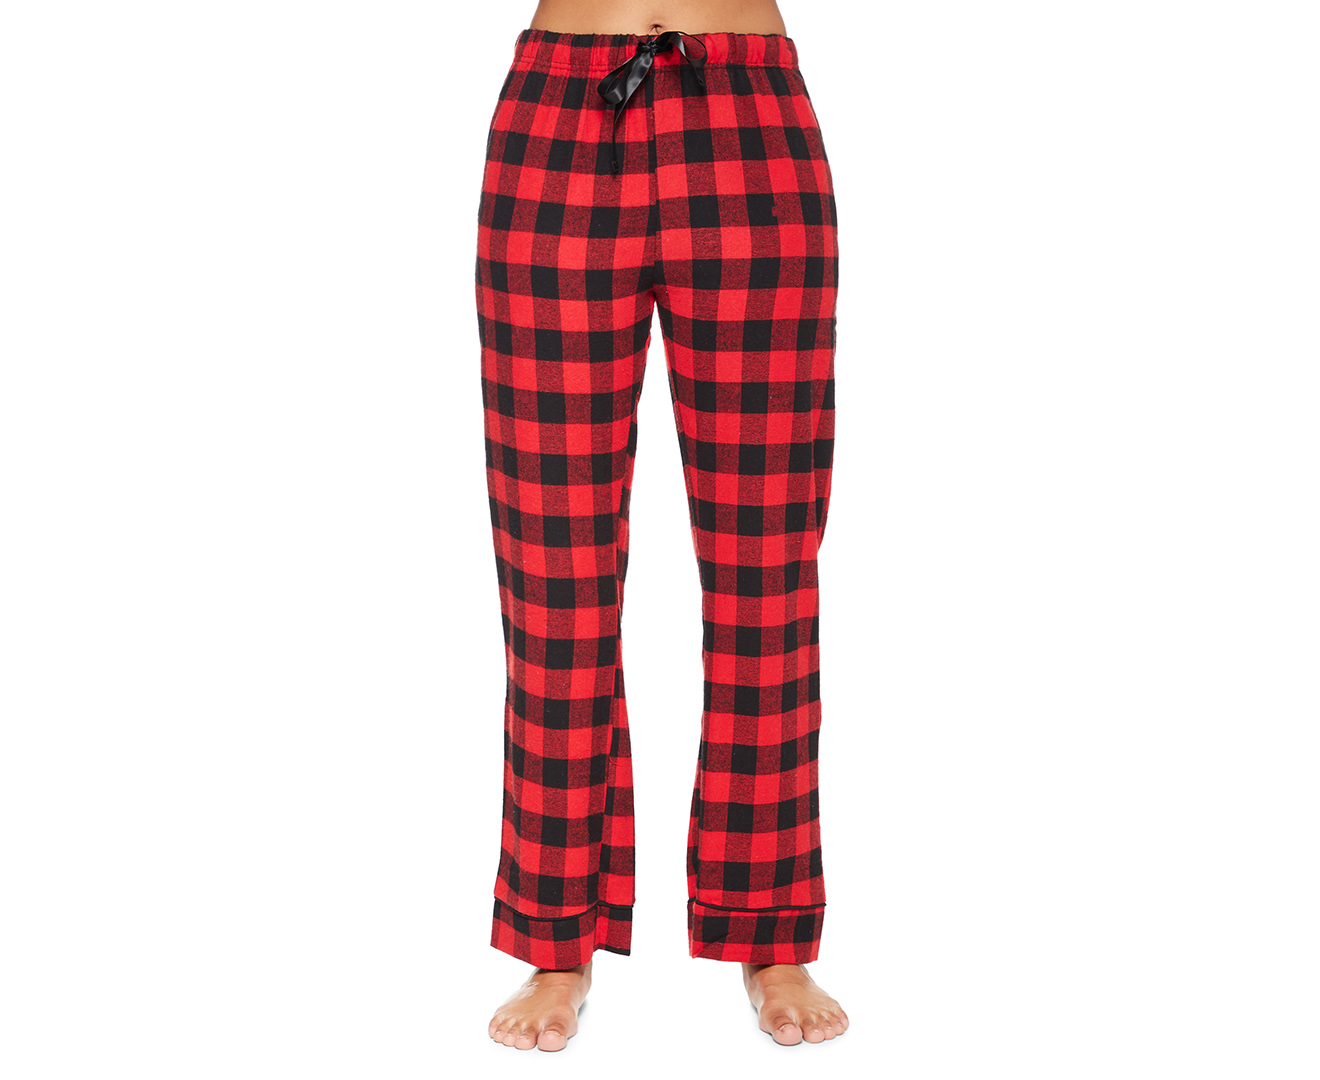 Upbeat Women's Flannel PJ / Lounge / Sleep Pants - Red/Black | Catch.com.au